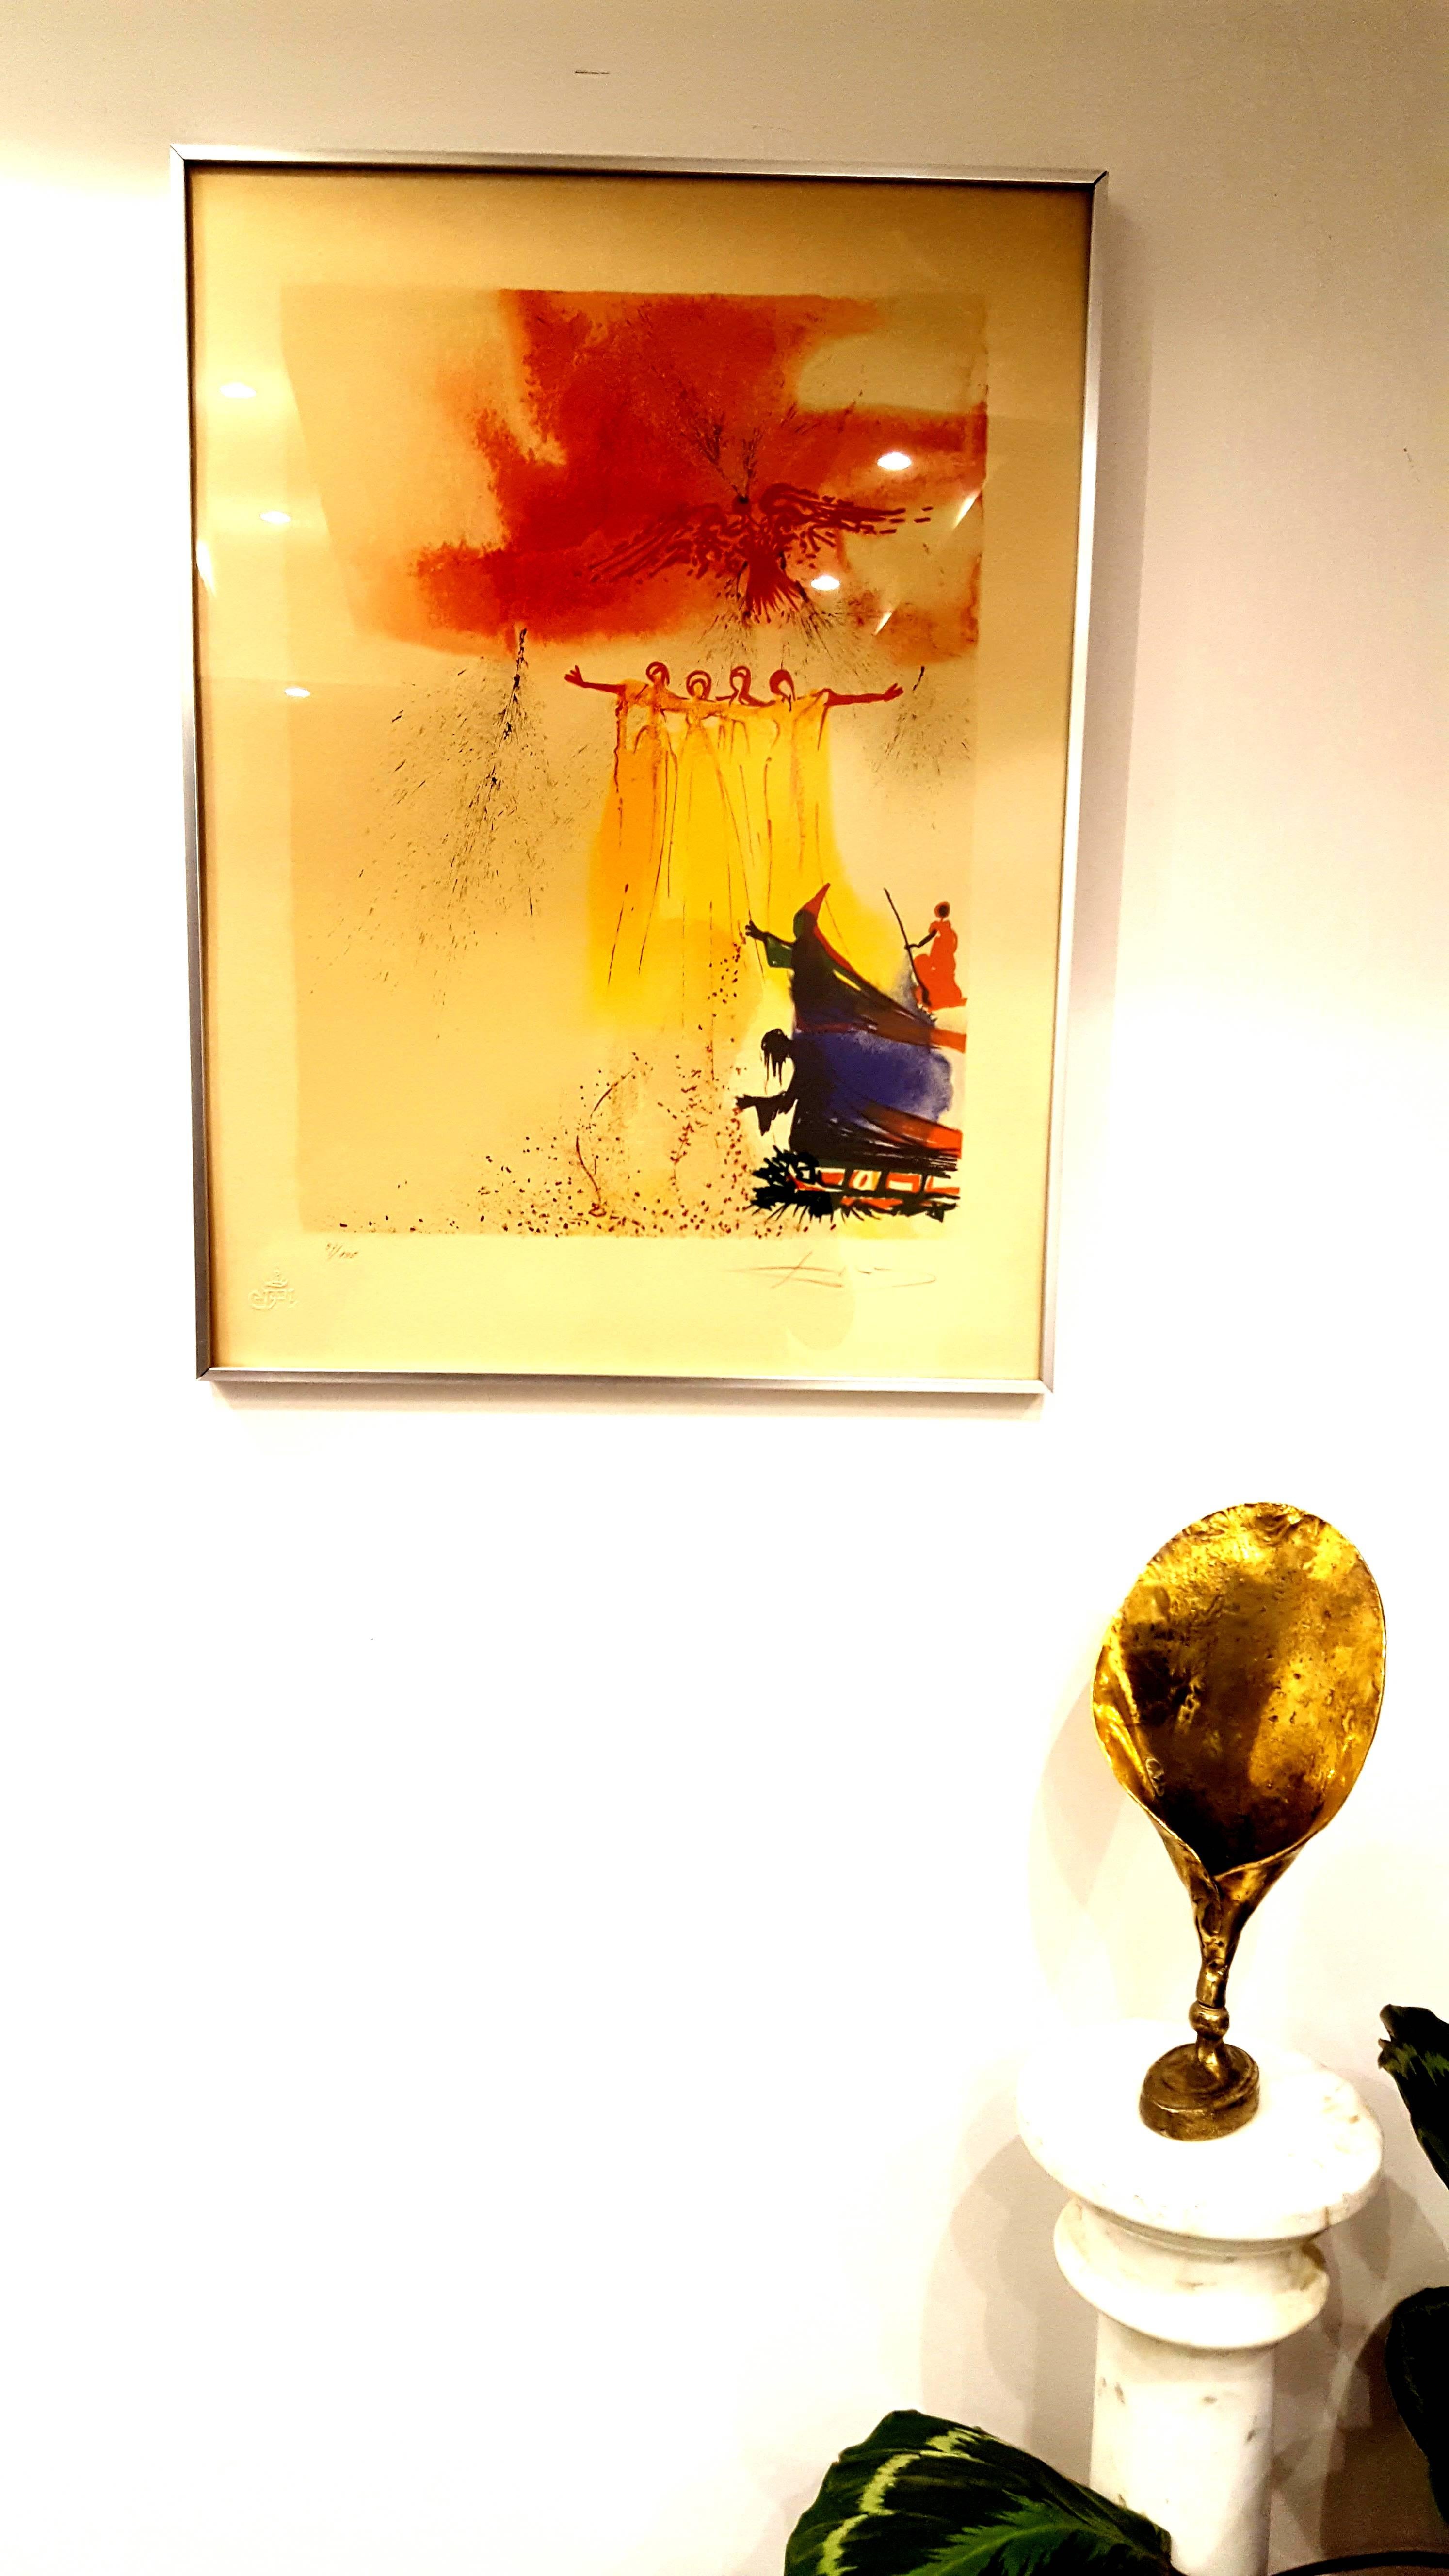 Salvador Dali - Fairy - Handsigned Lithograph - Print by Salvador Dalí